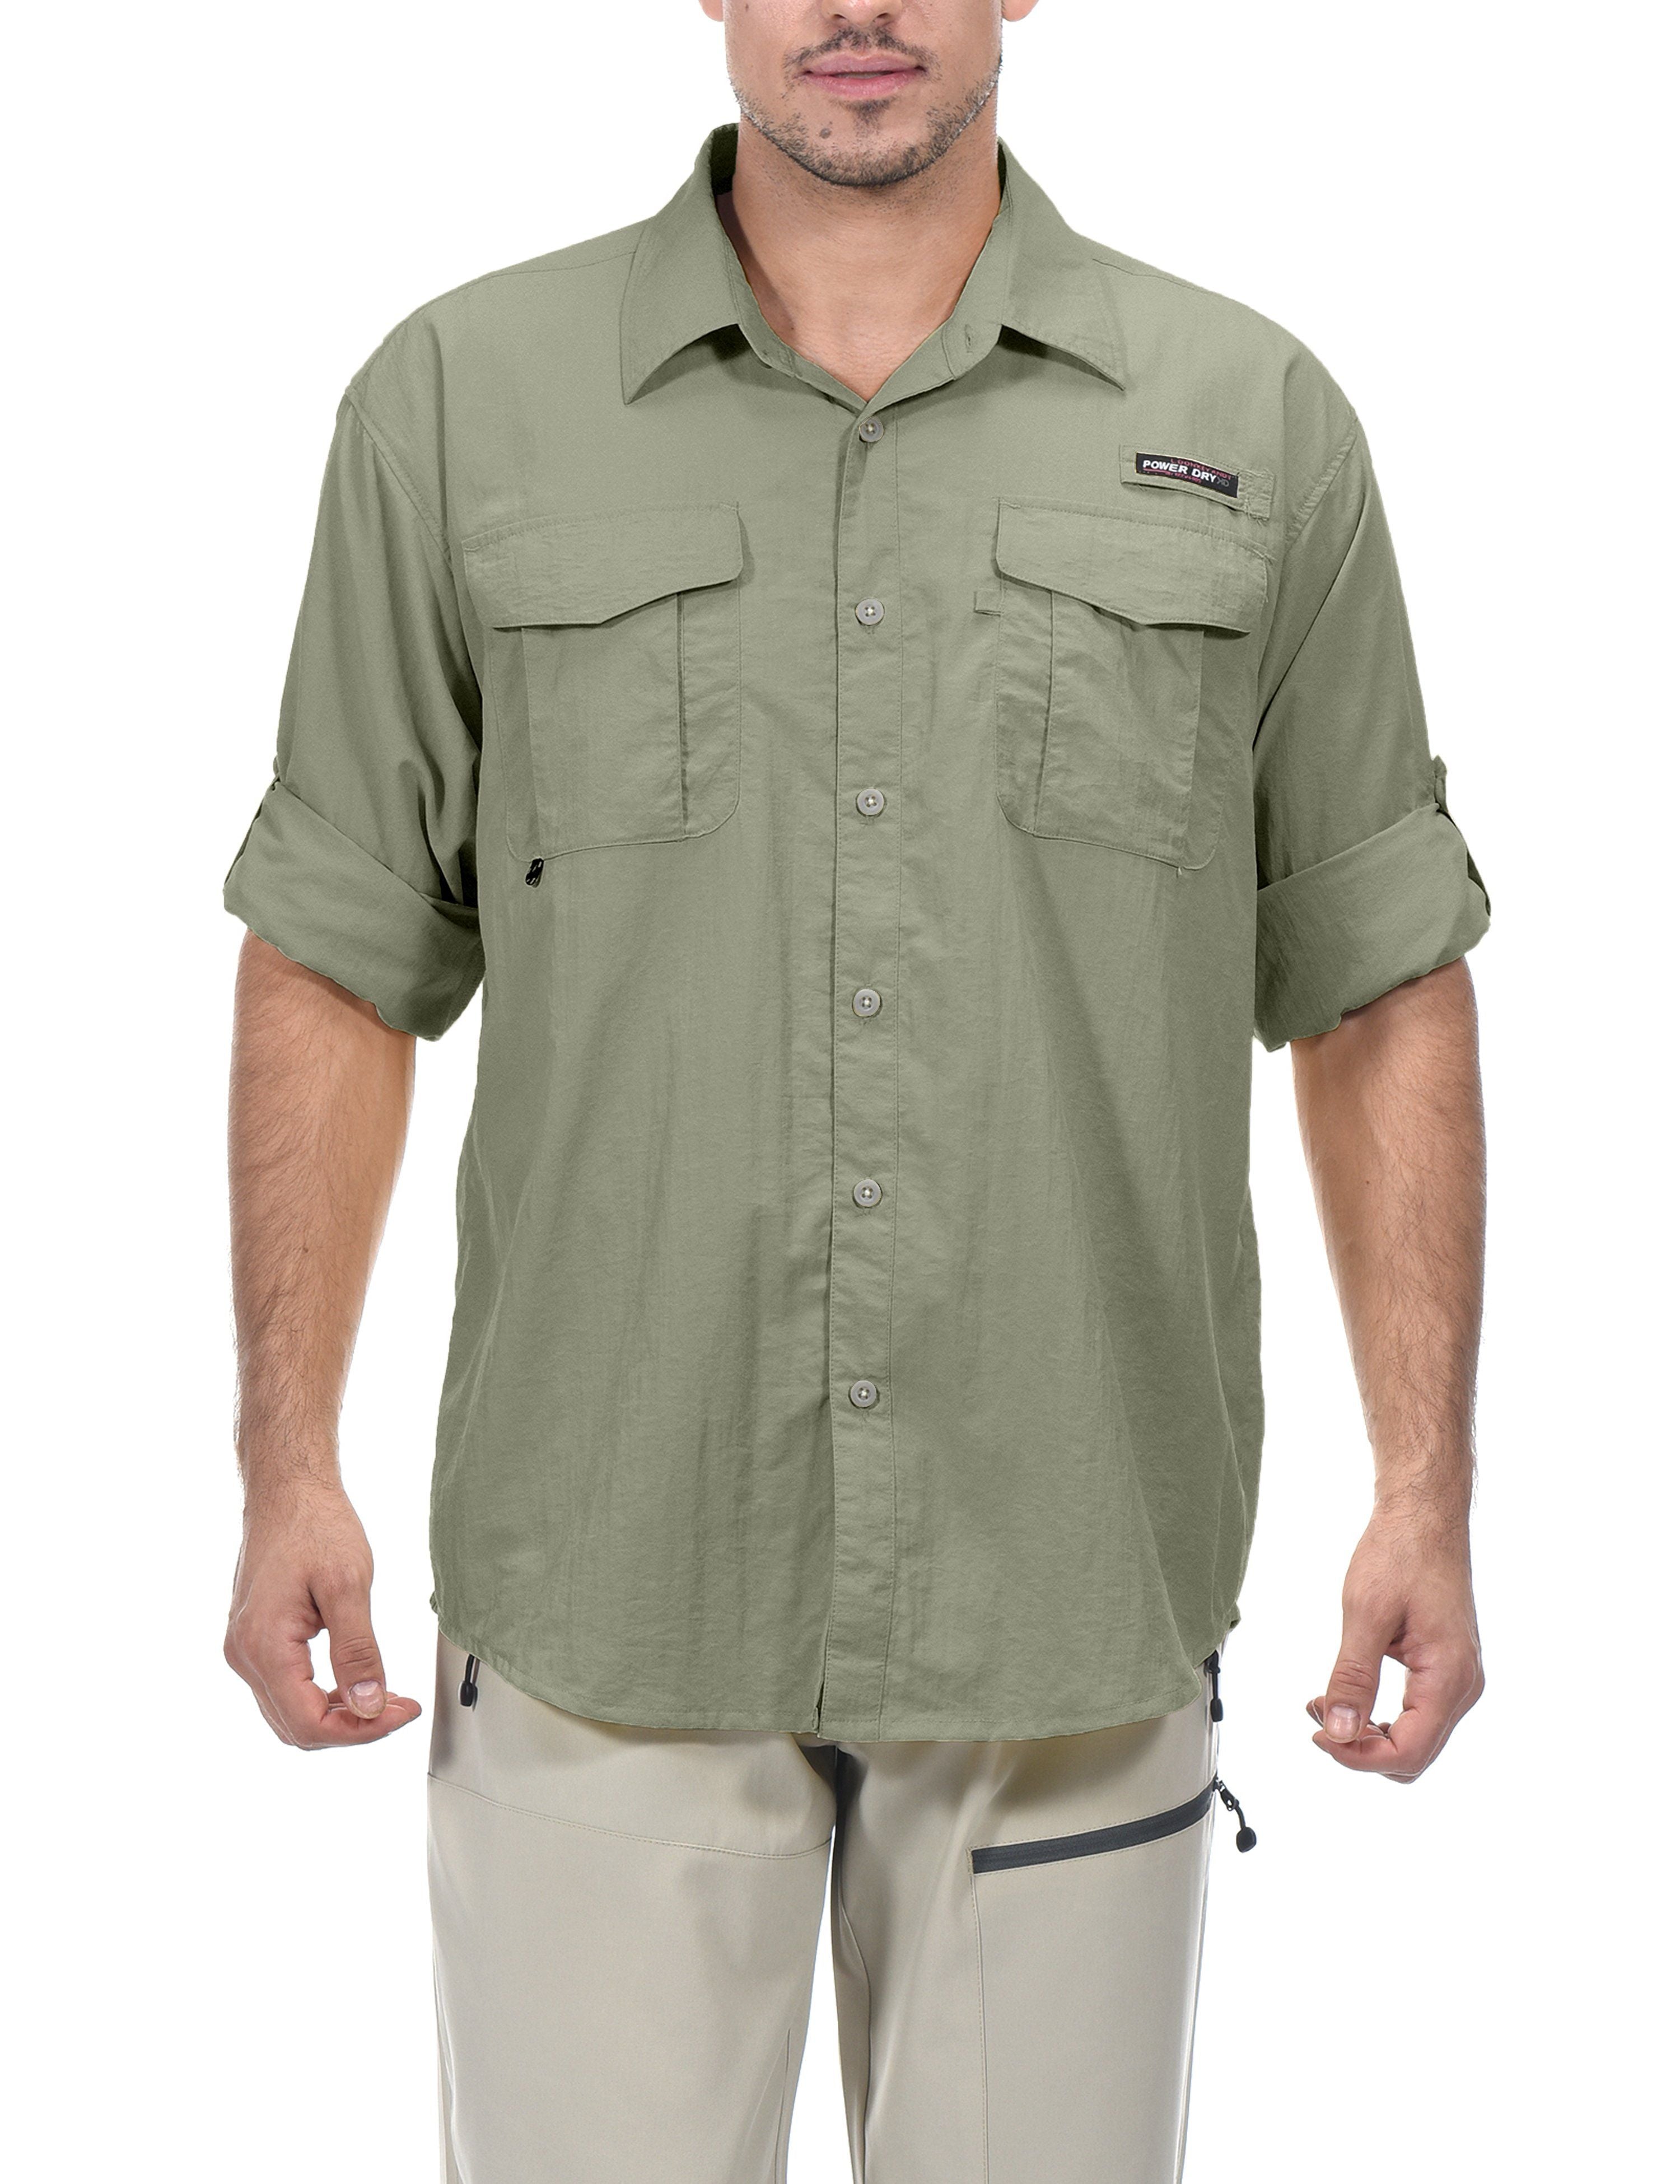 Men's UPF 50+ Long Sleeve Fishing Shirts Sun Protection Breathable